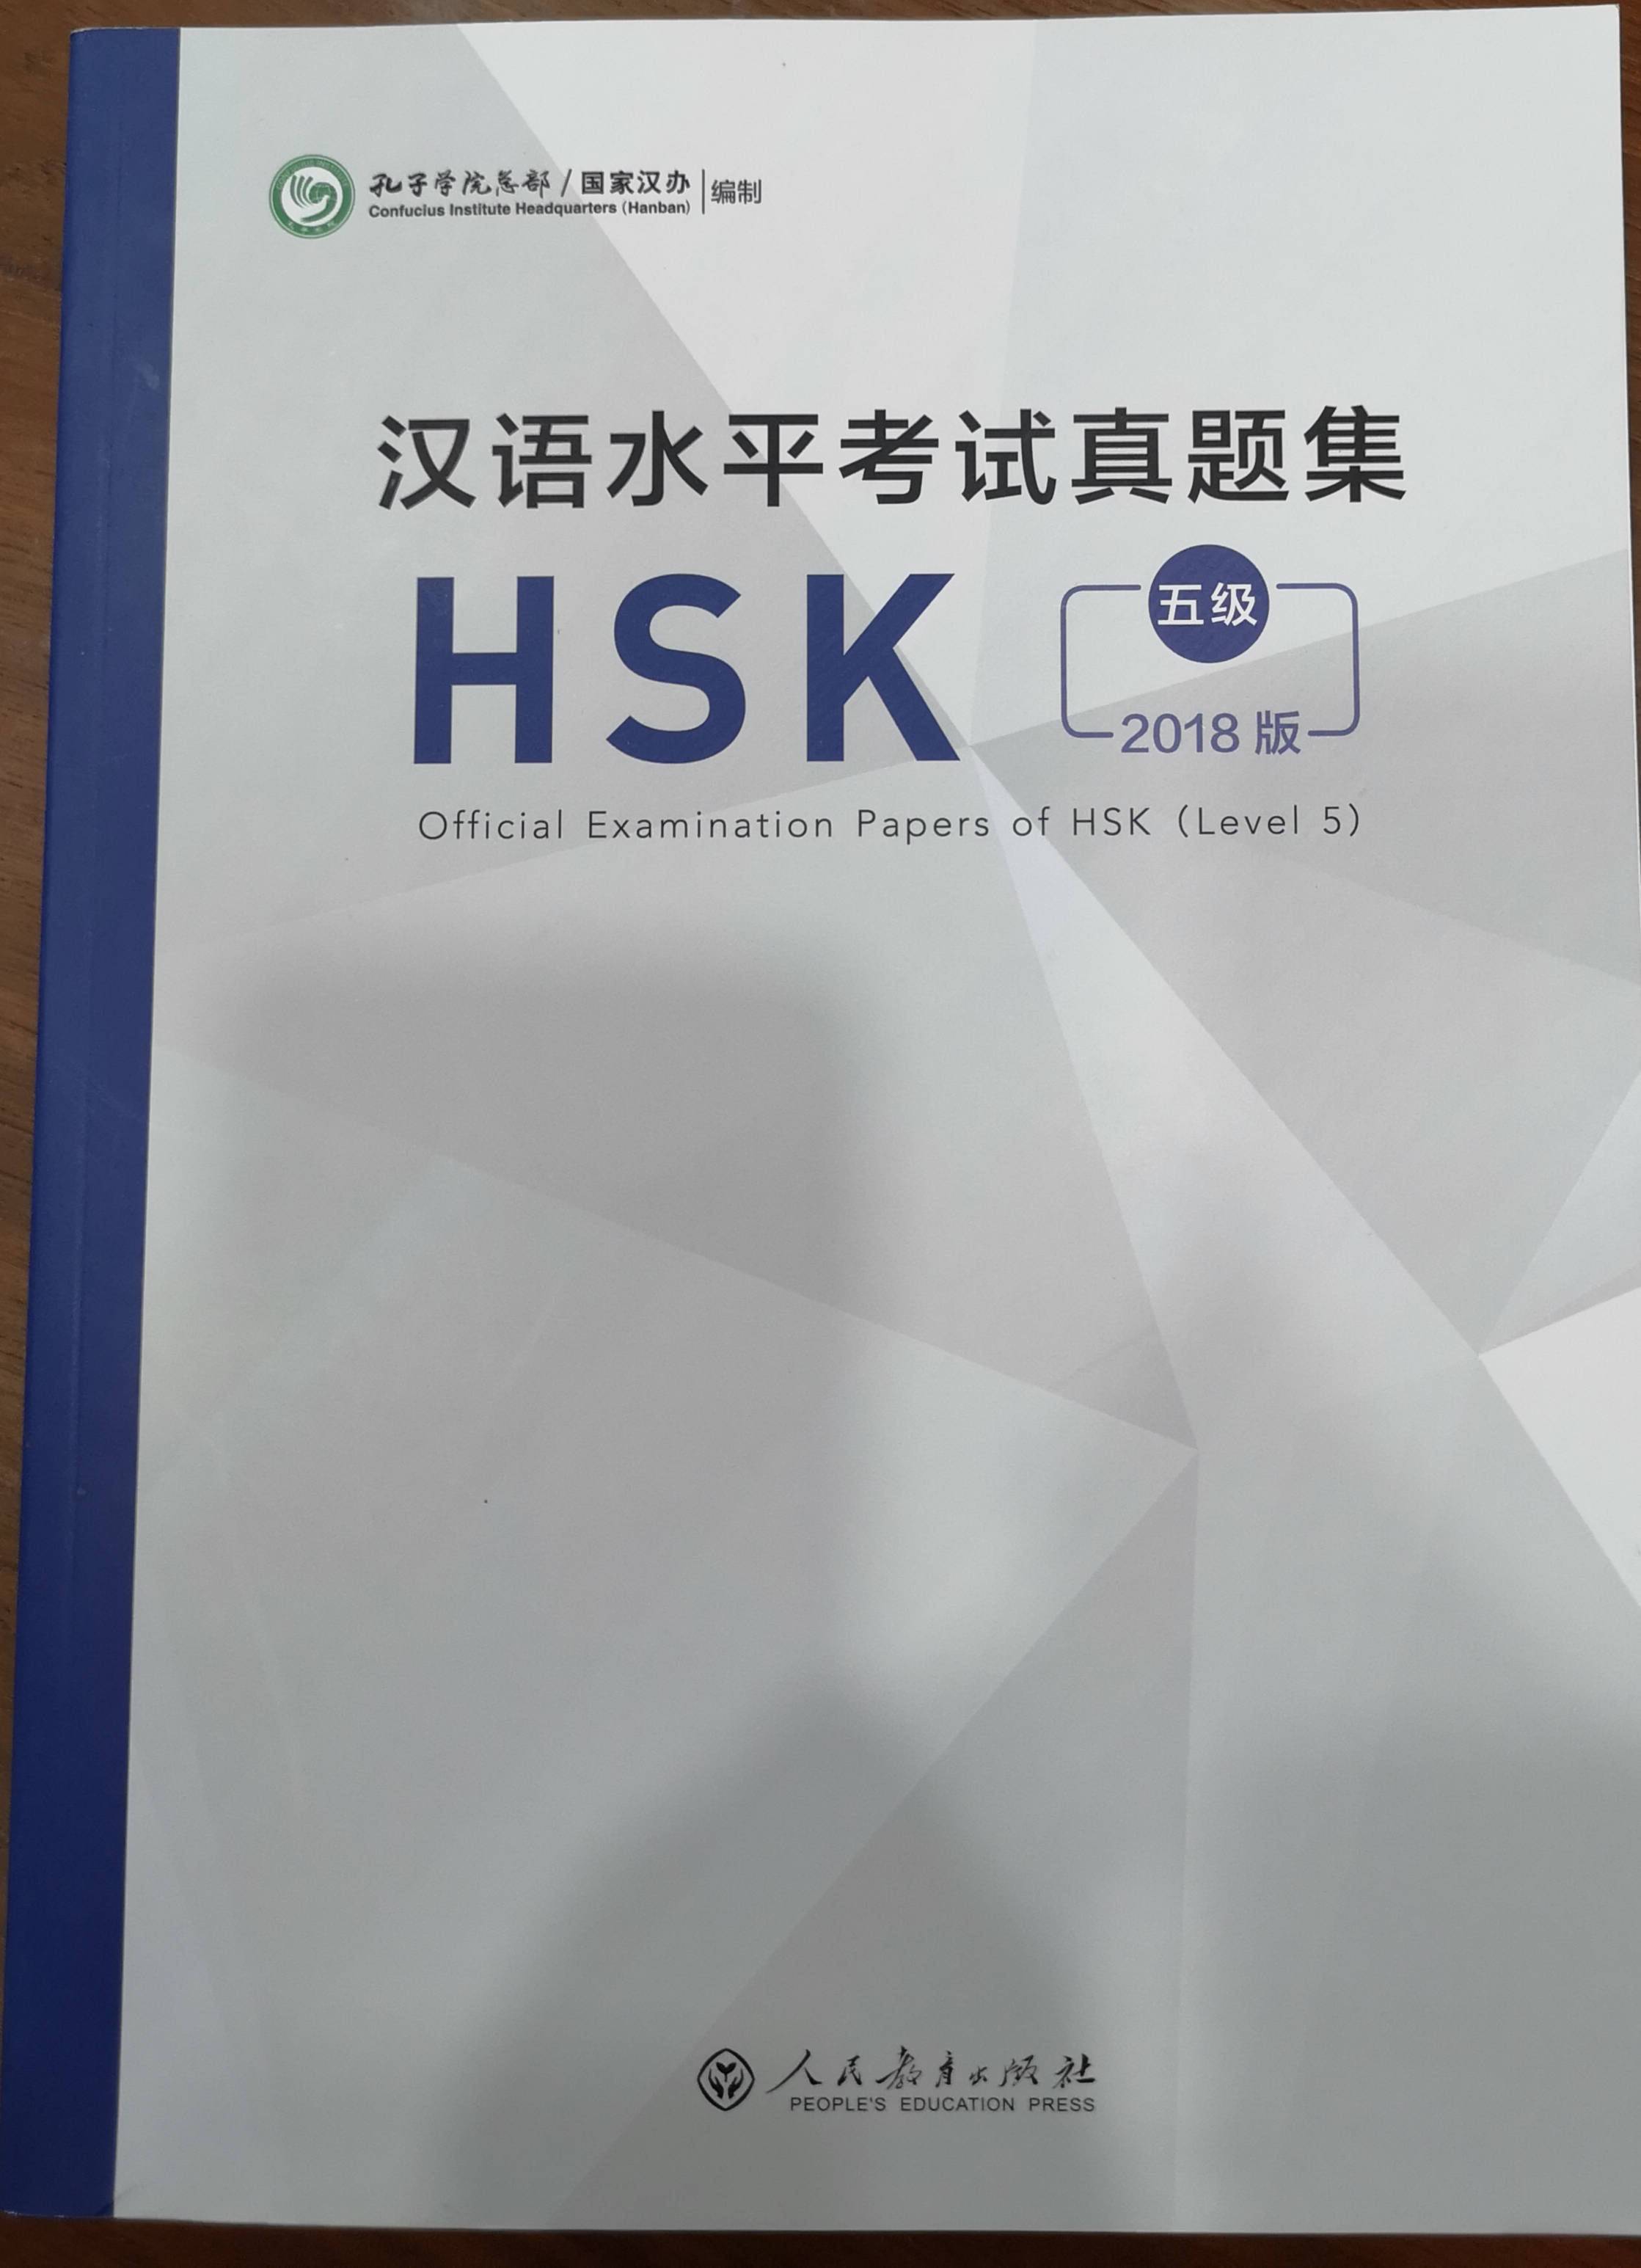 HSK5 ข้อสอบจริงHSK ข้อสอบวัดระดับภาษาจีน หนังสือHSK ฉบับปี 2018 汉语水平考试真题集 Official Examination Papers of HSK